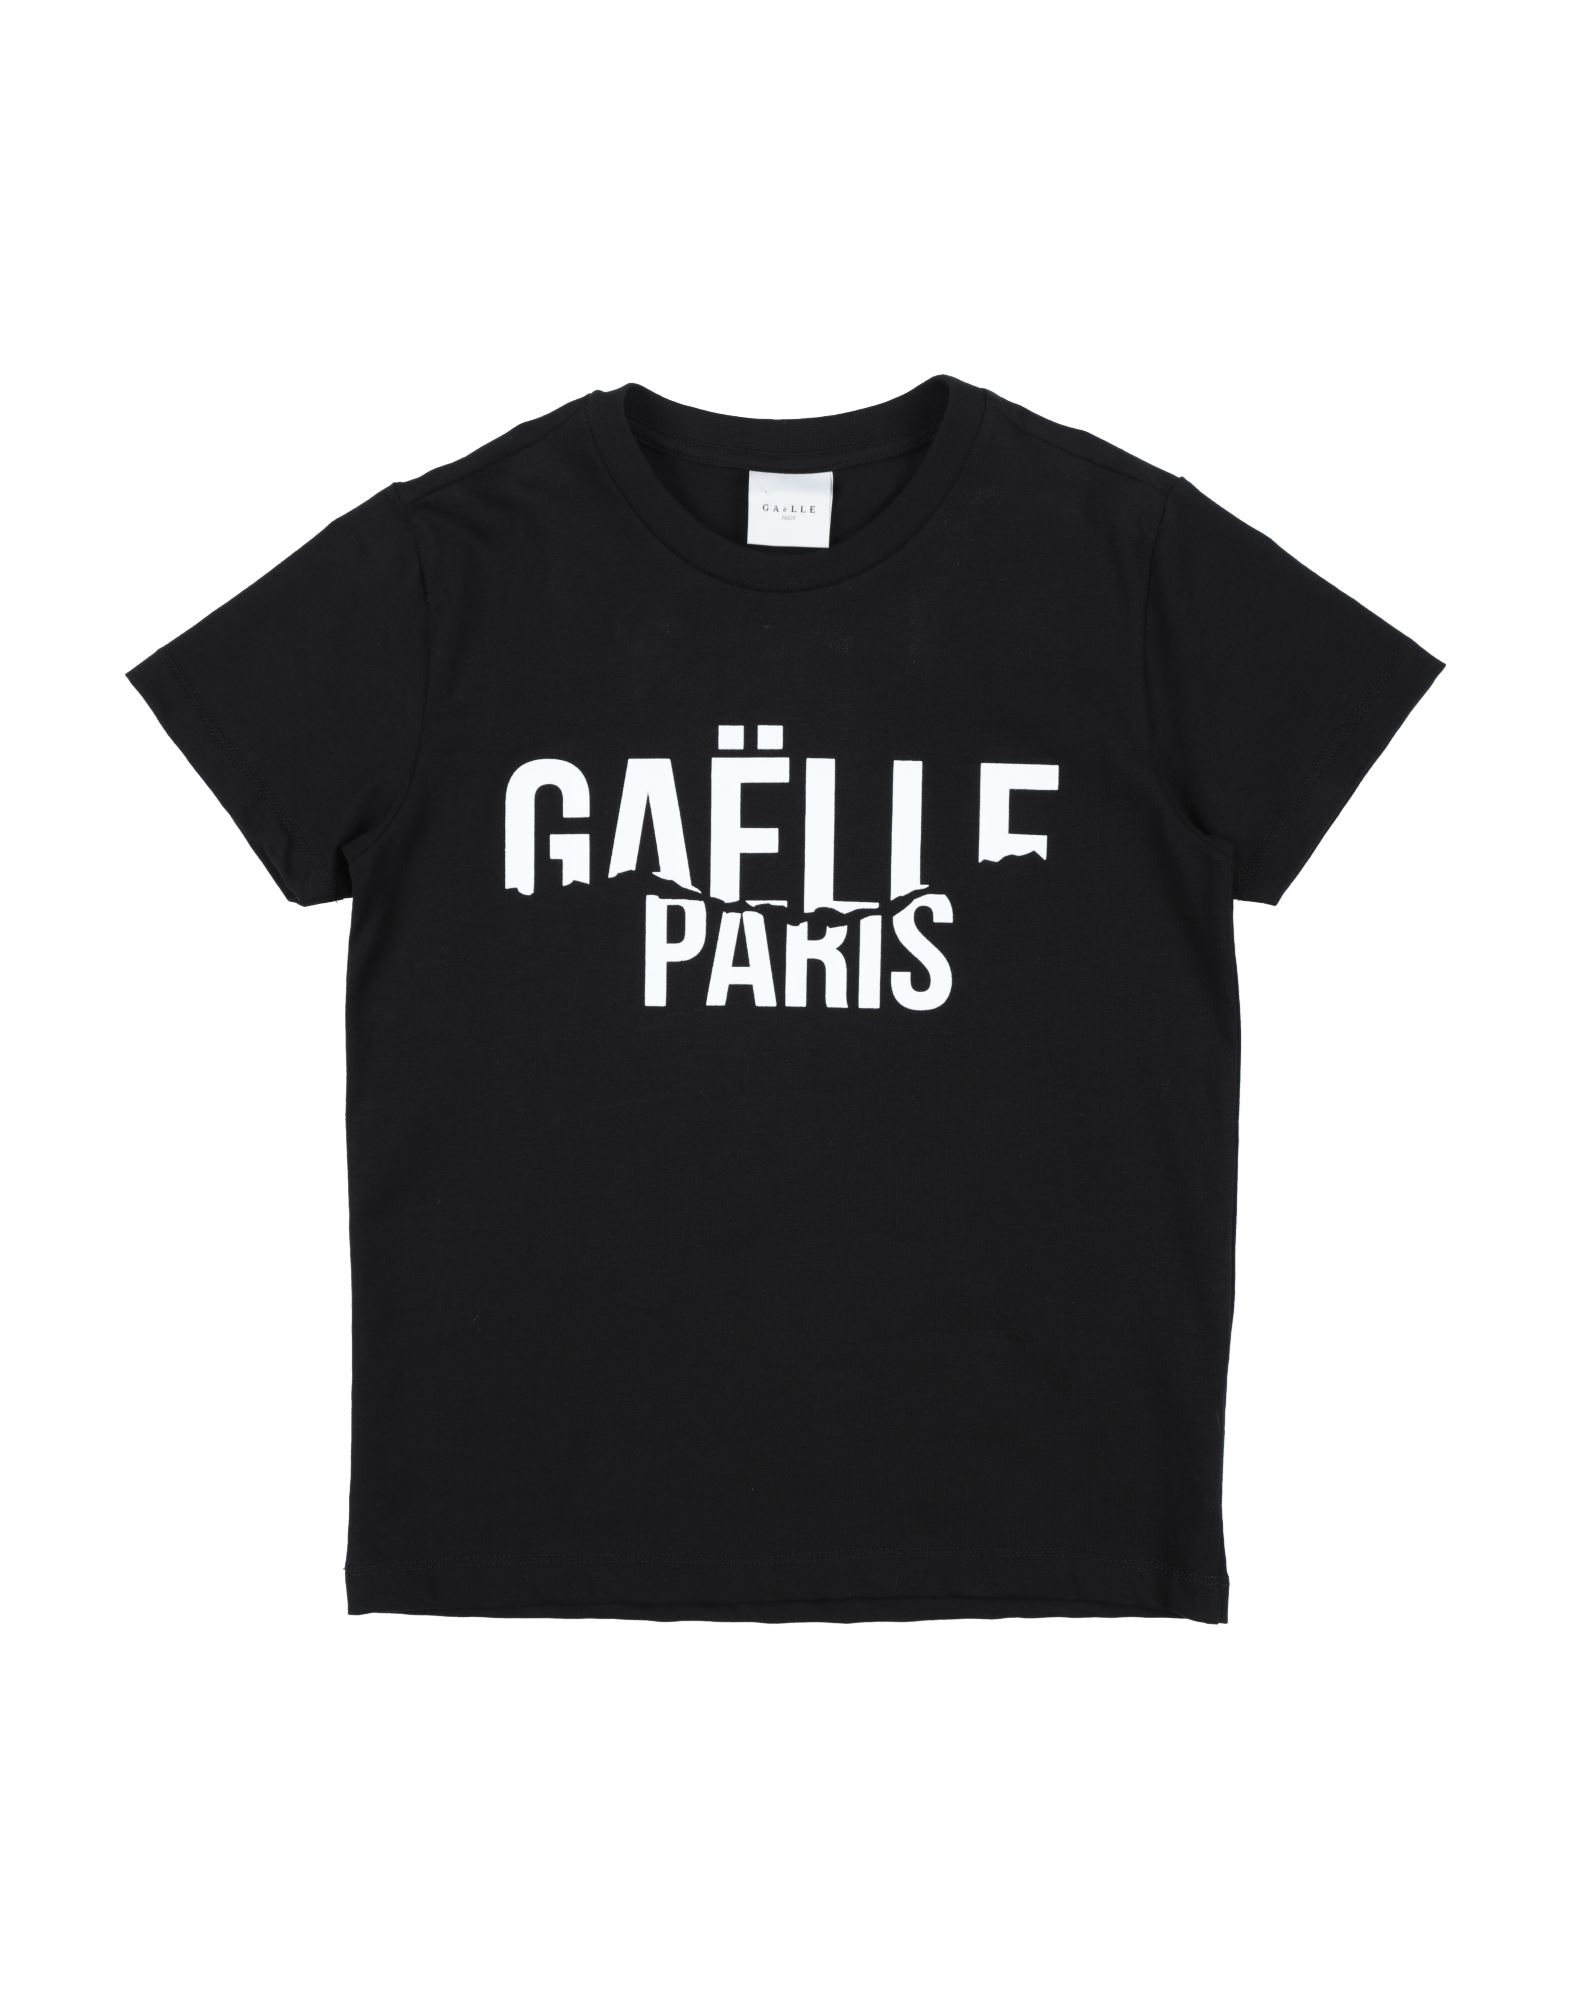 GAELLE PARIS T-SHIRTS